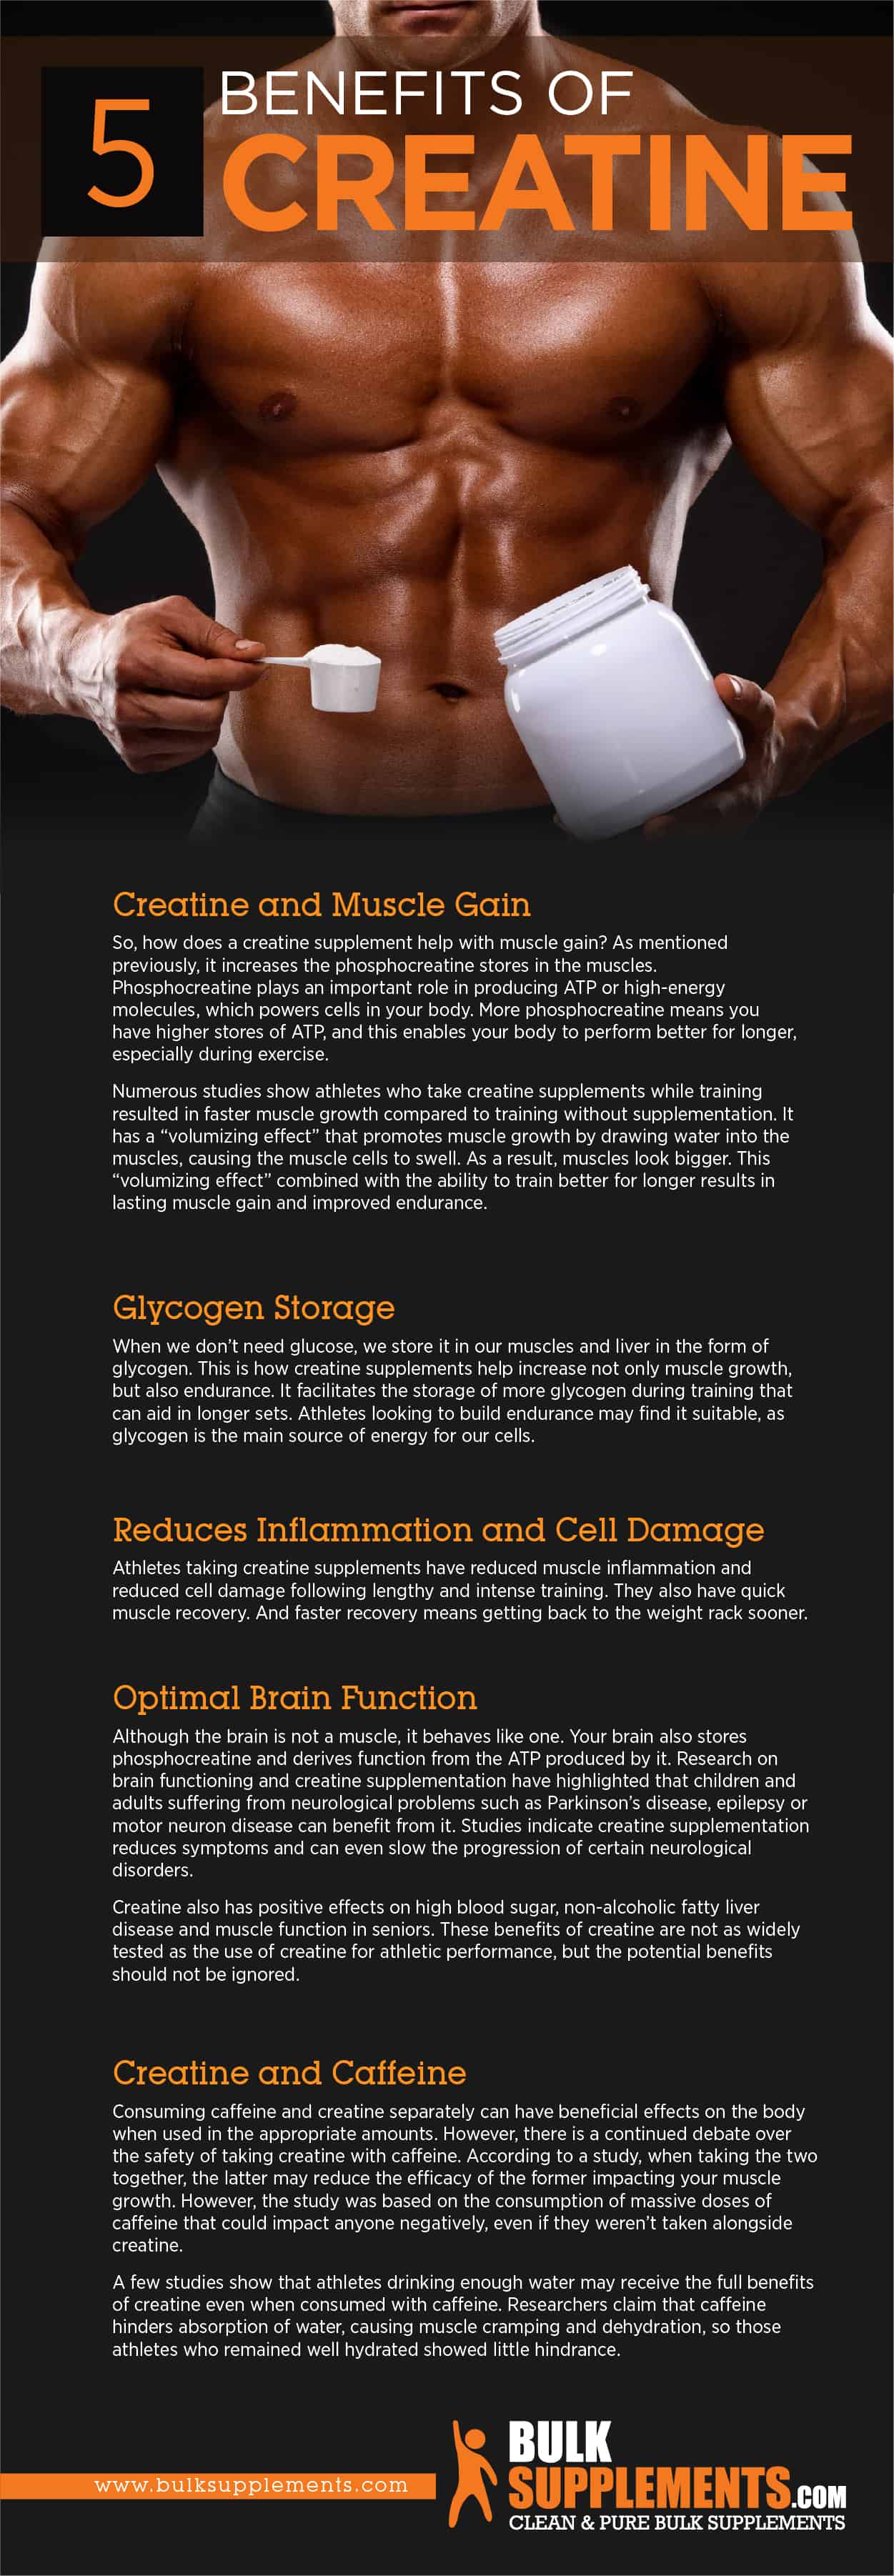 Benefits of creatine supplements